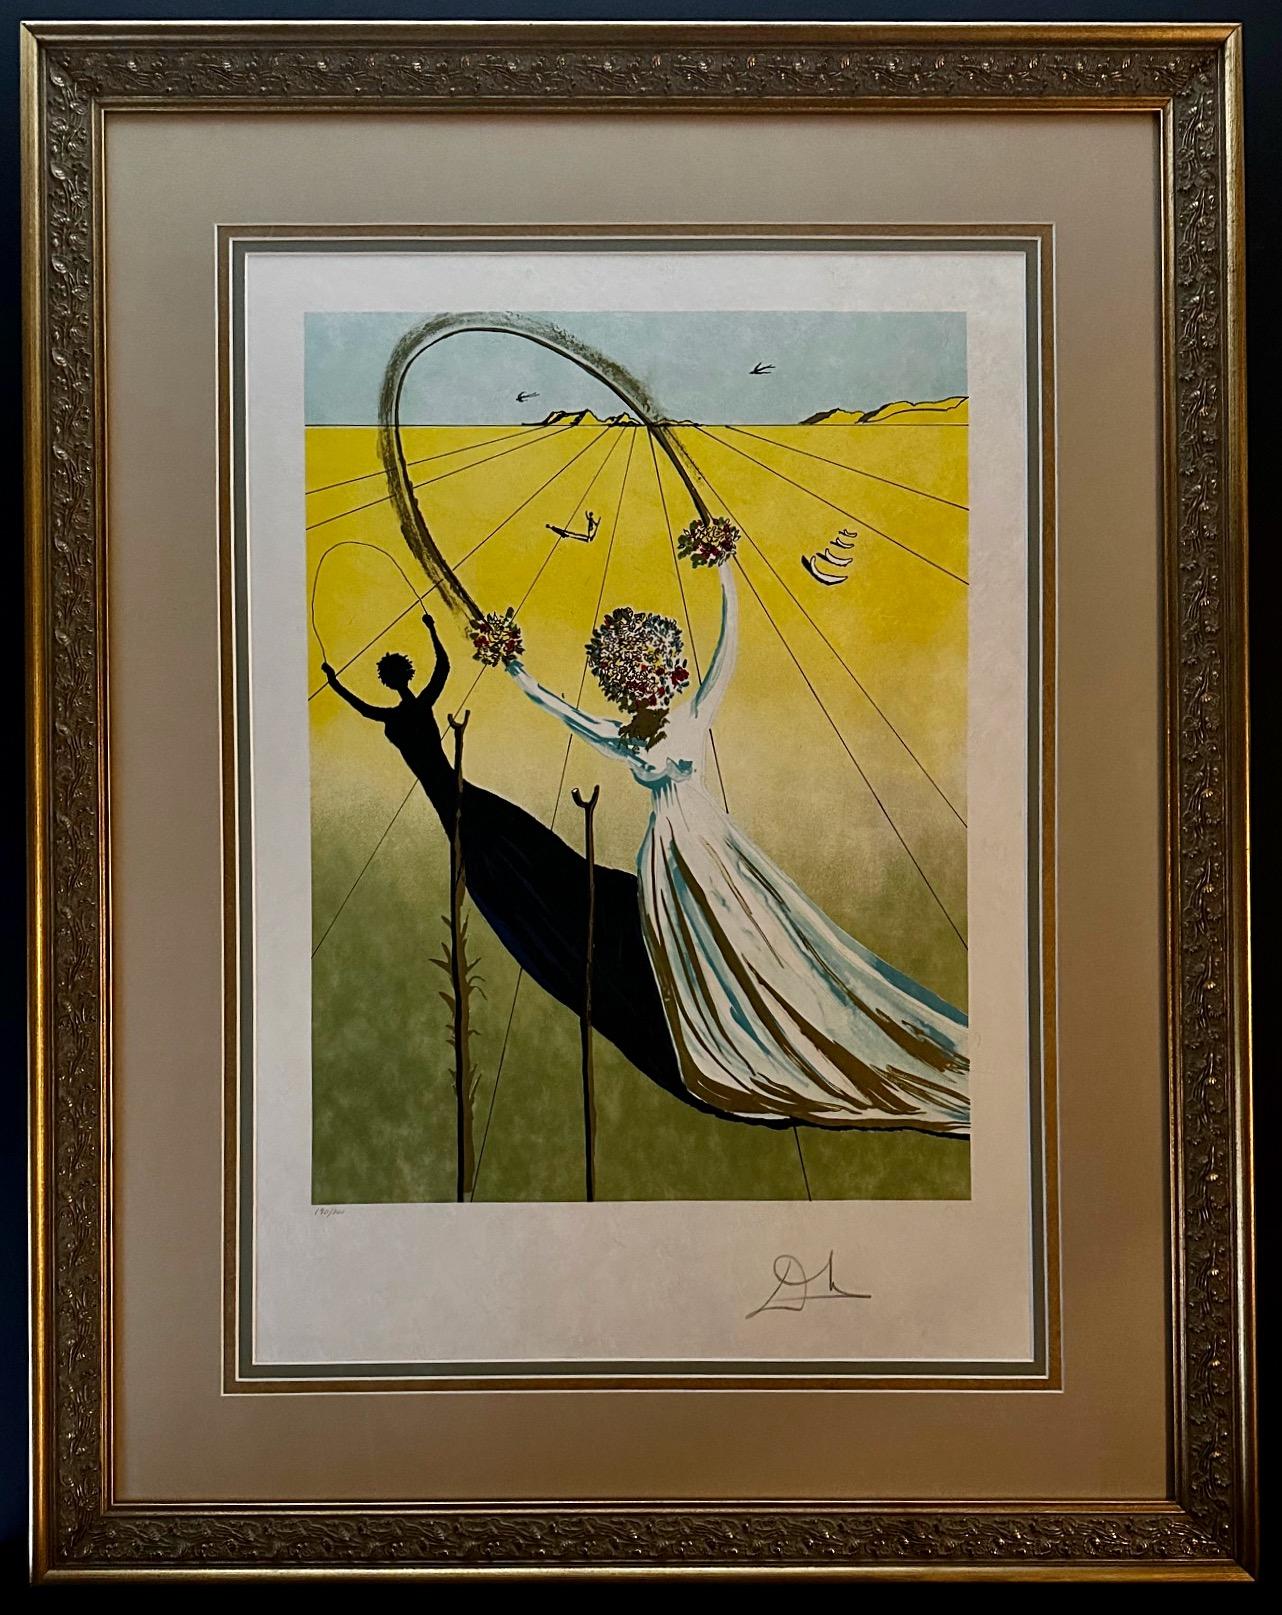 Figurative Print Salvador Dalí - Passage de rêve